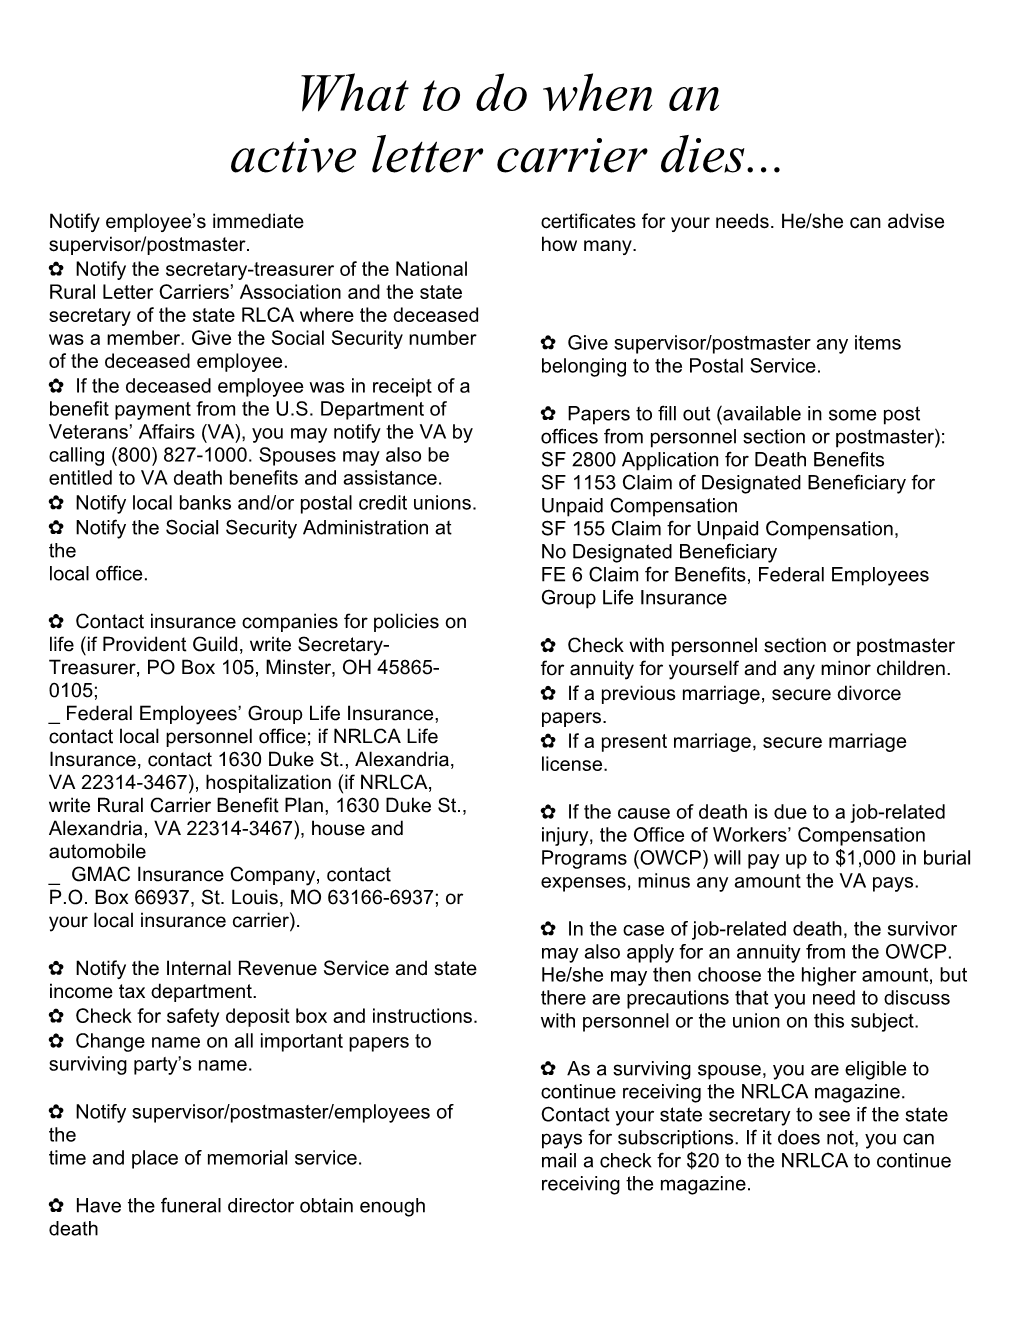 Active Letter Carrier Dies